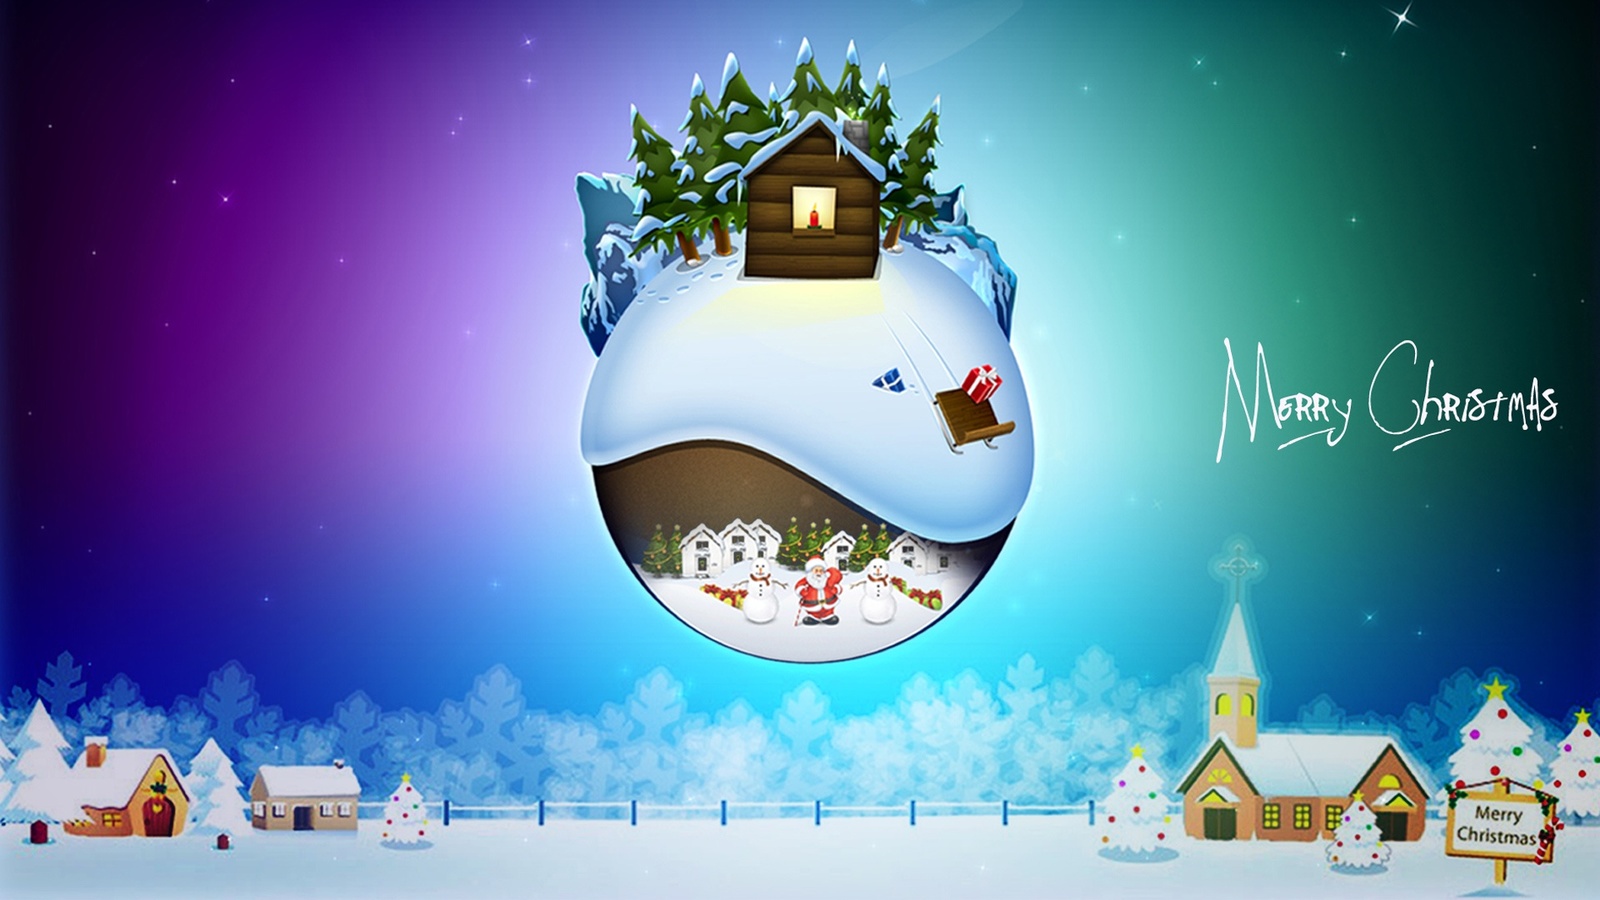 image-merry-christmas-wallpaper.jpg